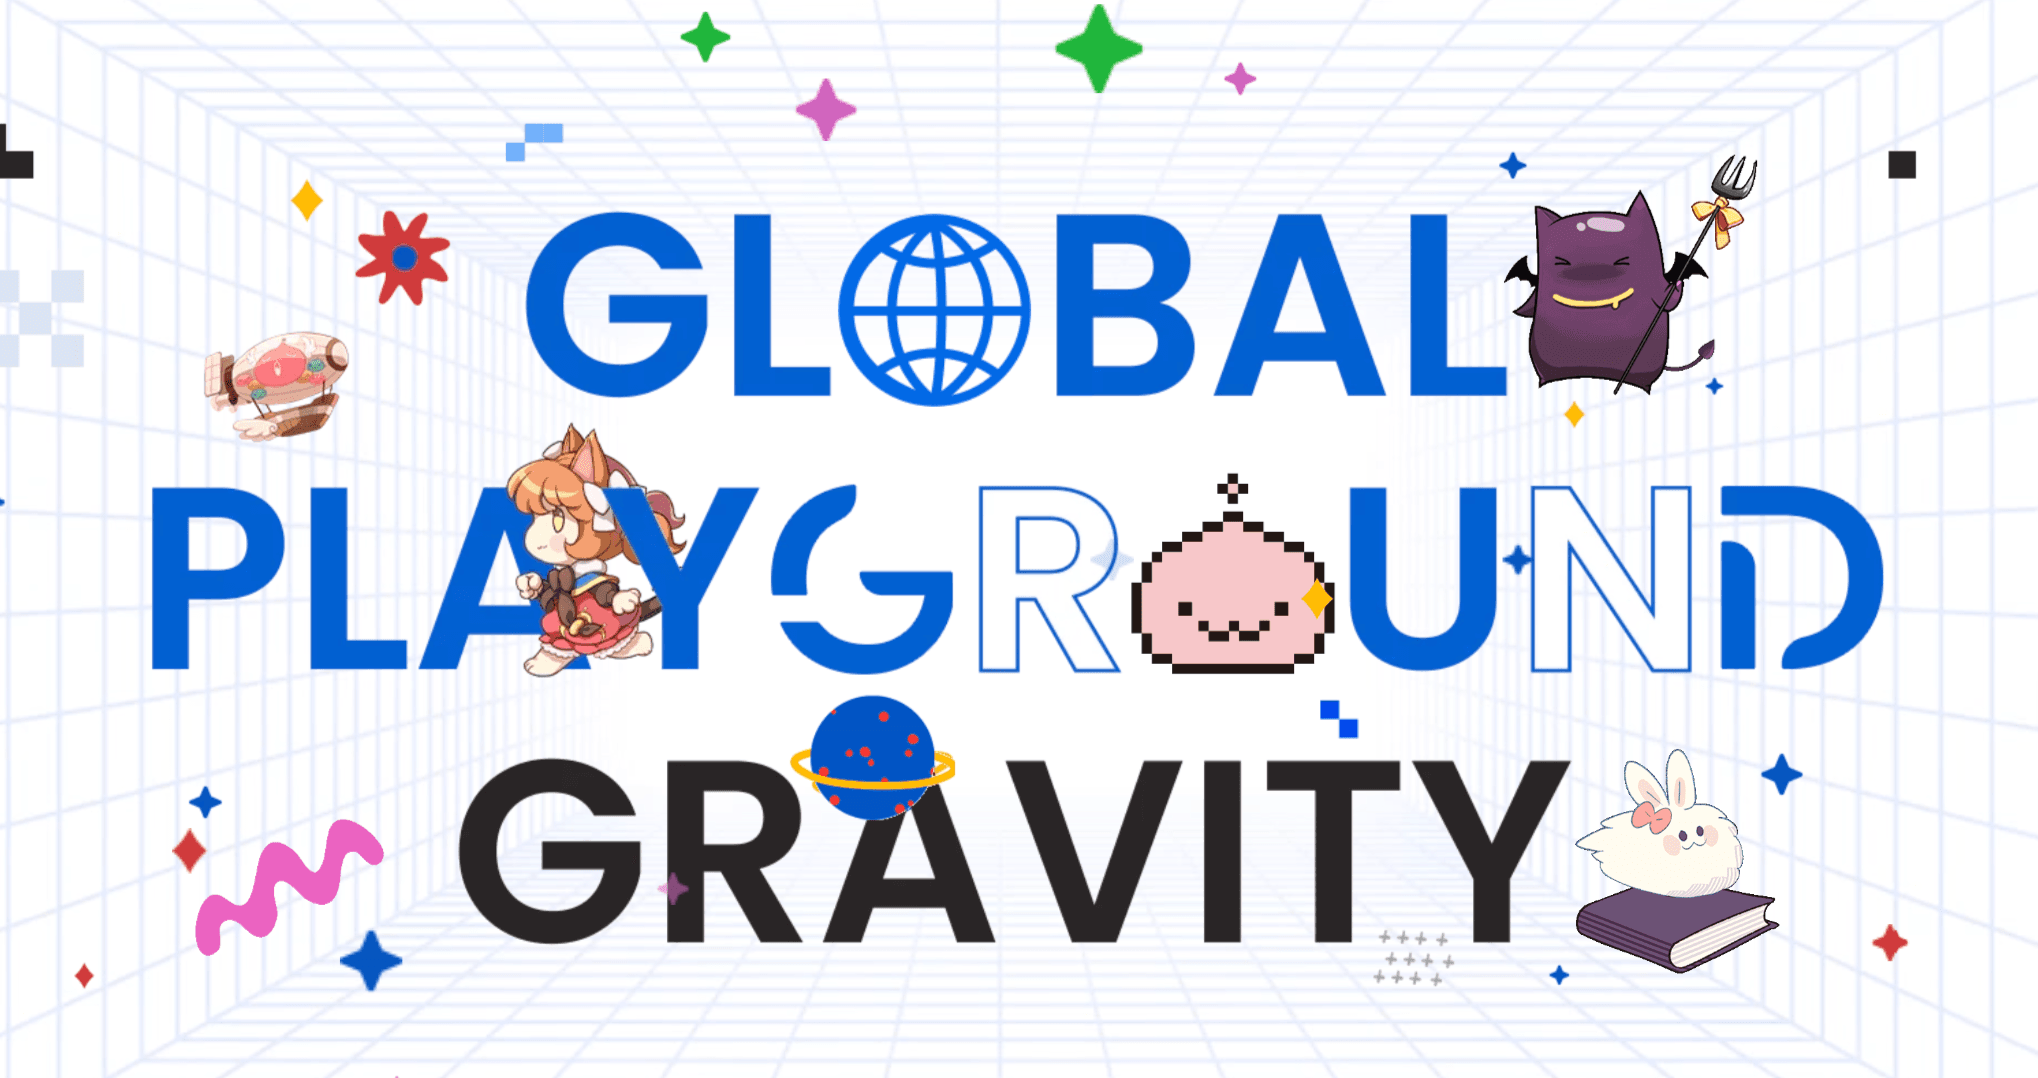 Gravity Co., Ltd South Korean video game company